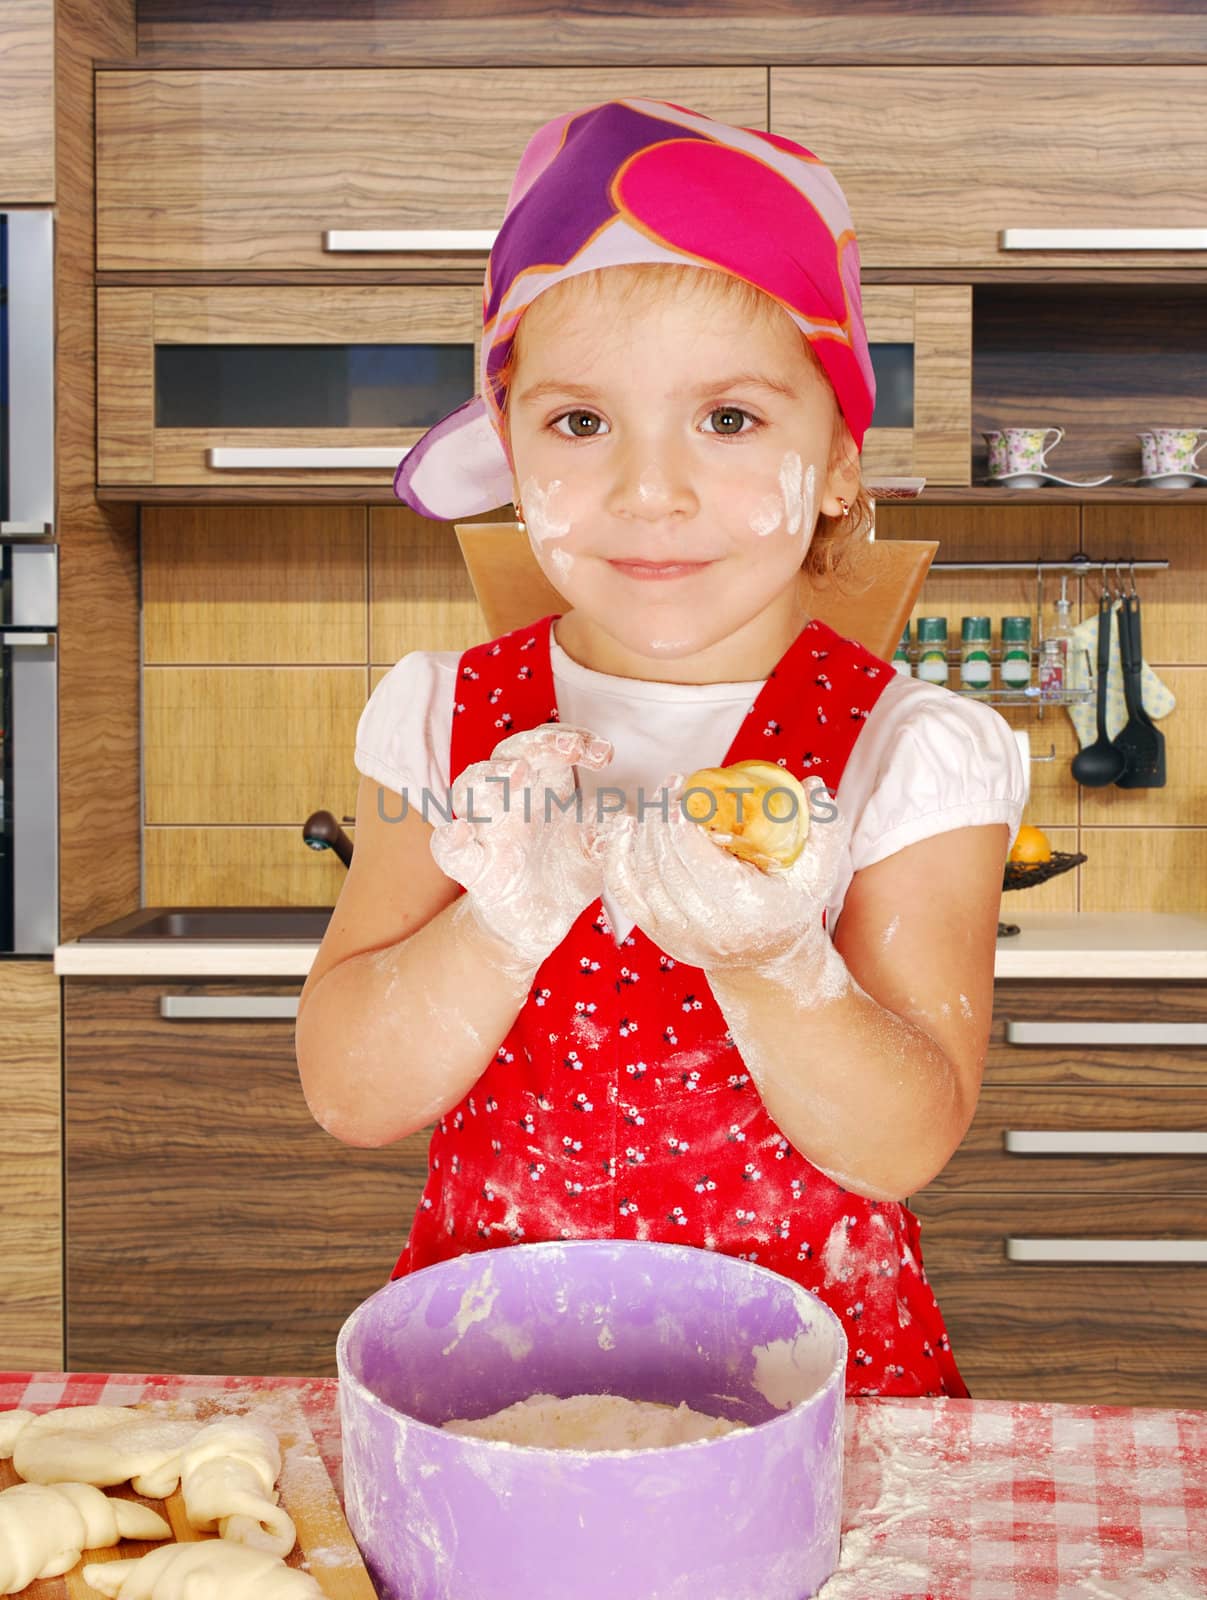 little girl make rolls in kitchen